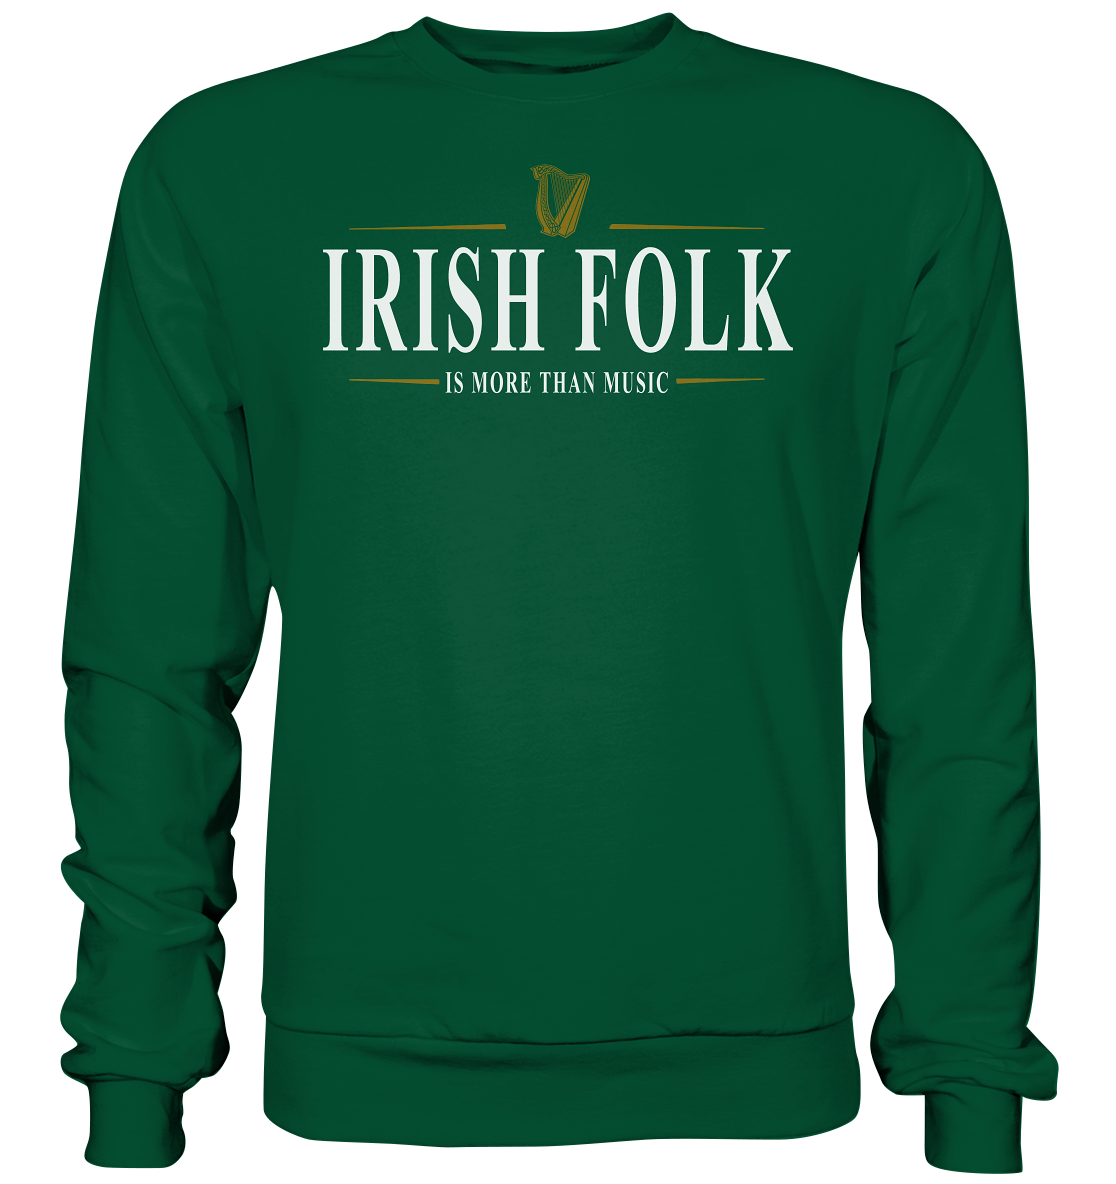 Irish Folk "Is More Than Music" - Basic Sweatshirt